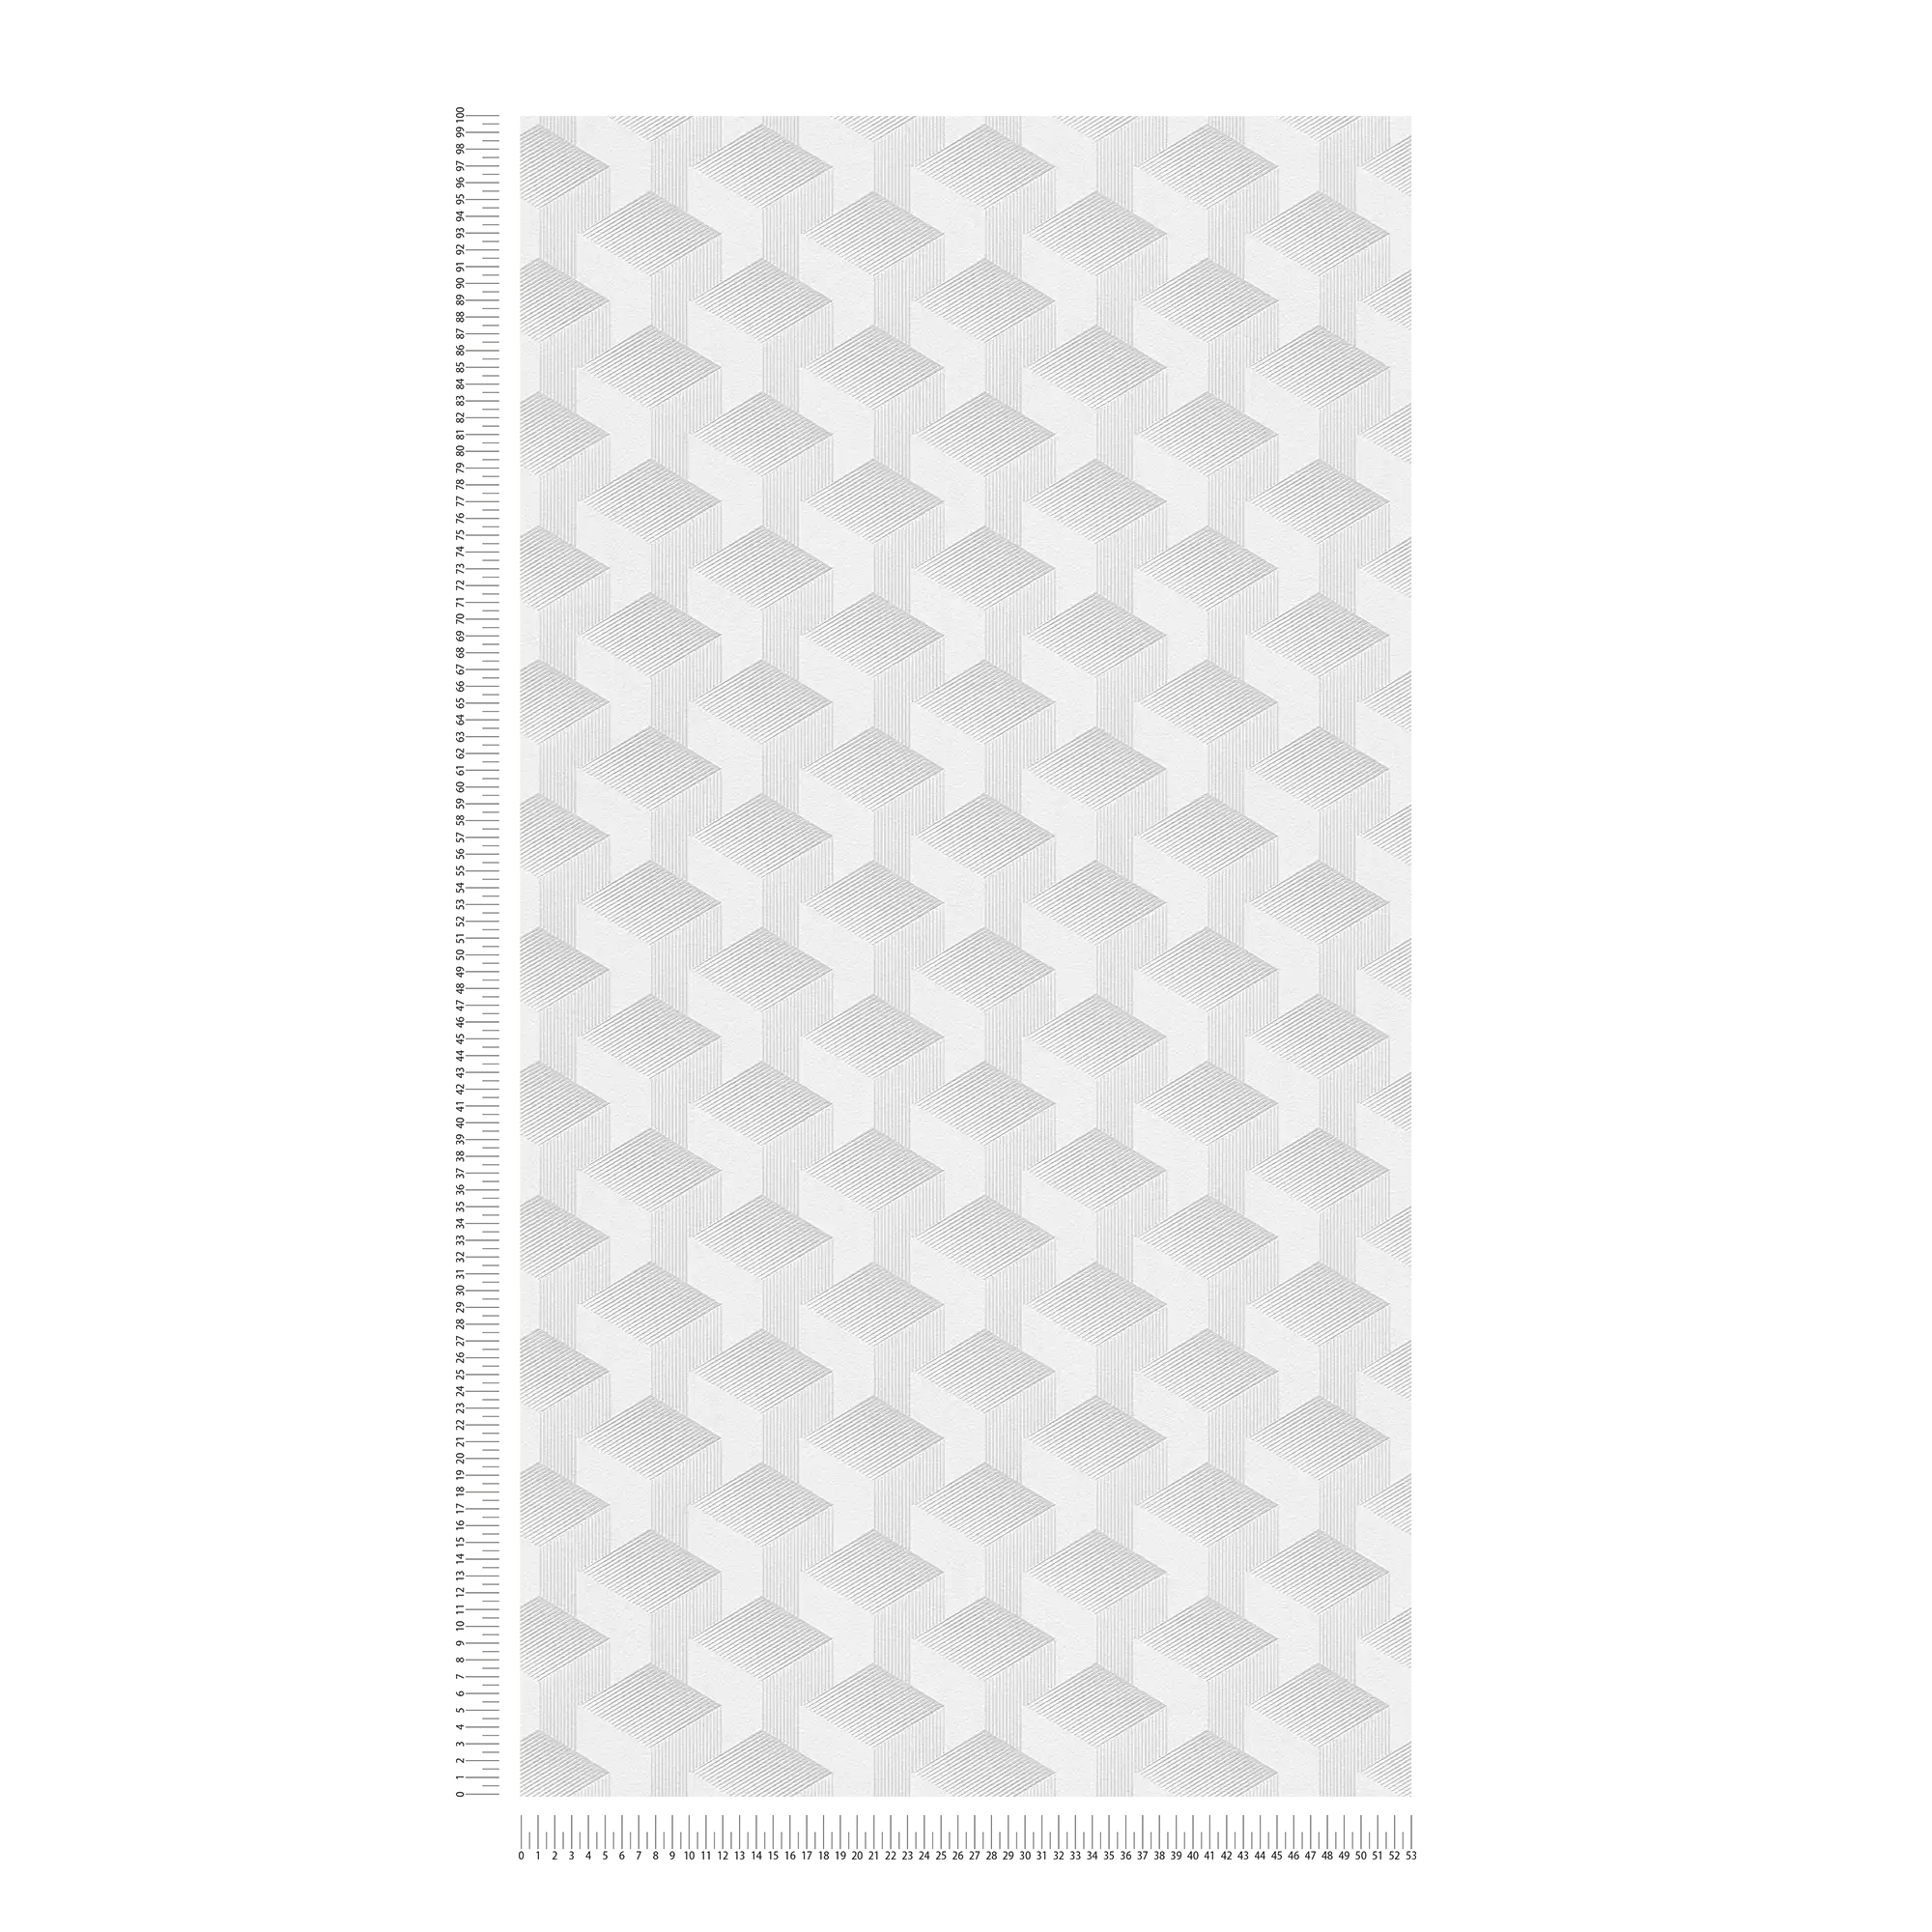             Geometric 3D wallpaper with graphic pattern matt - grey
        